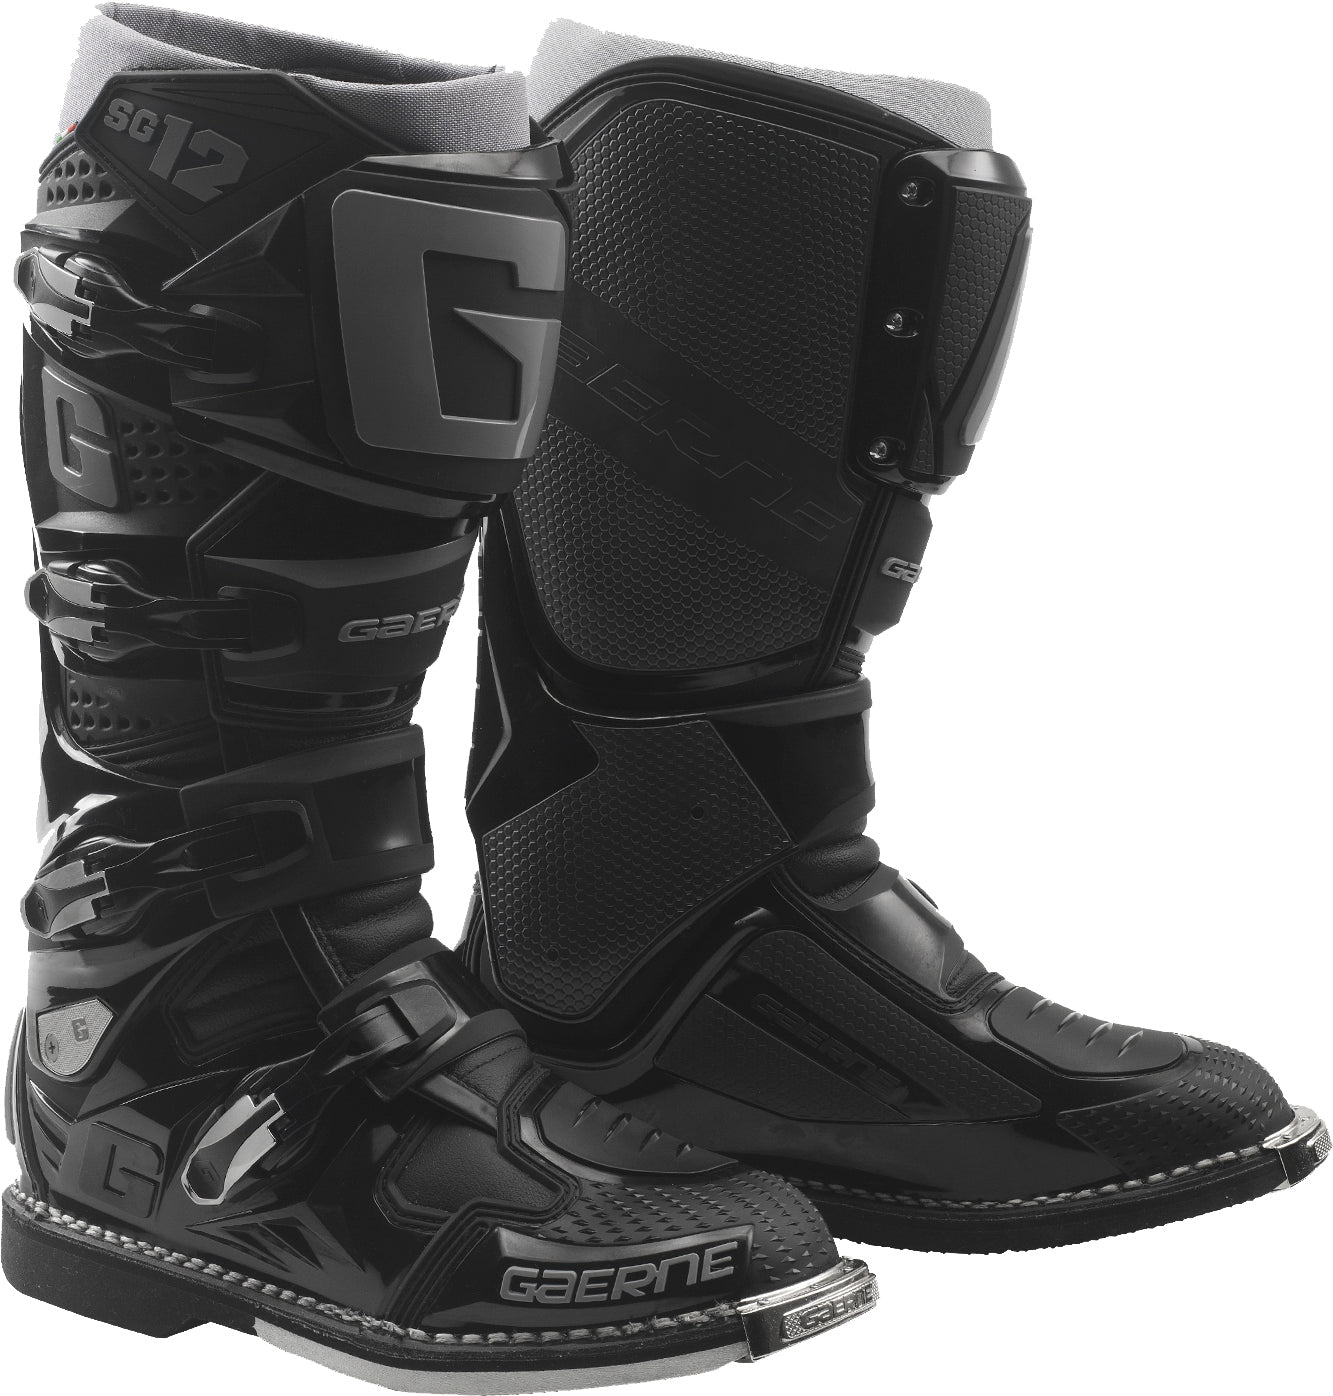 Sg 12 Boots Black Sz 13